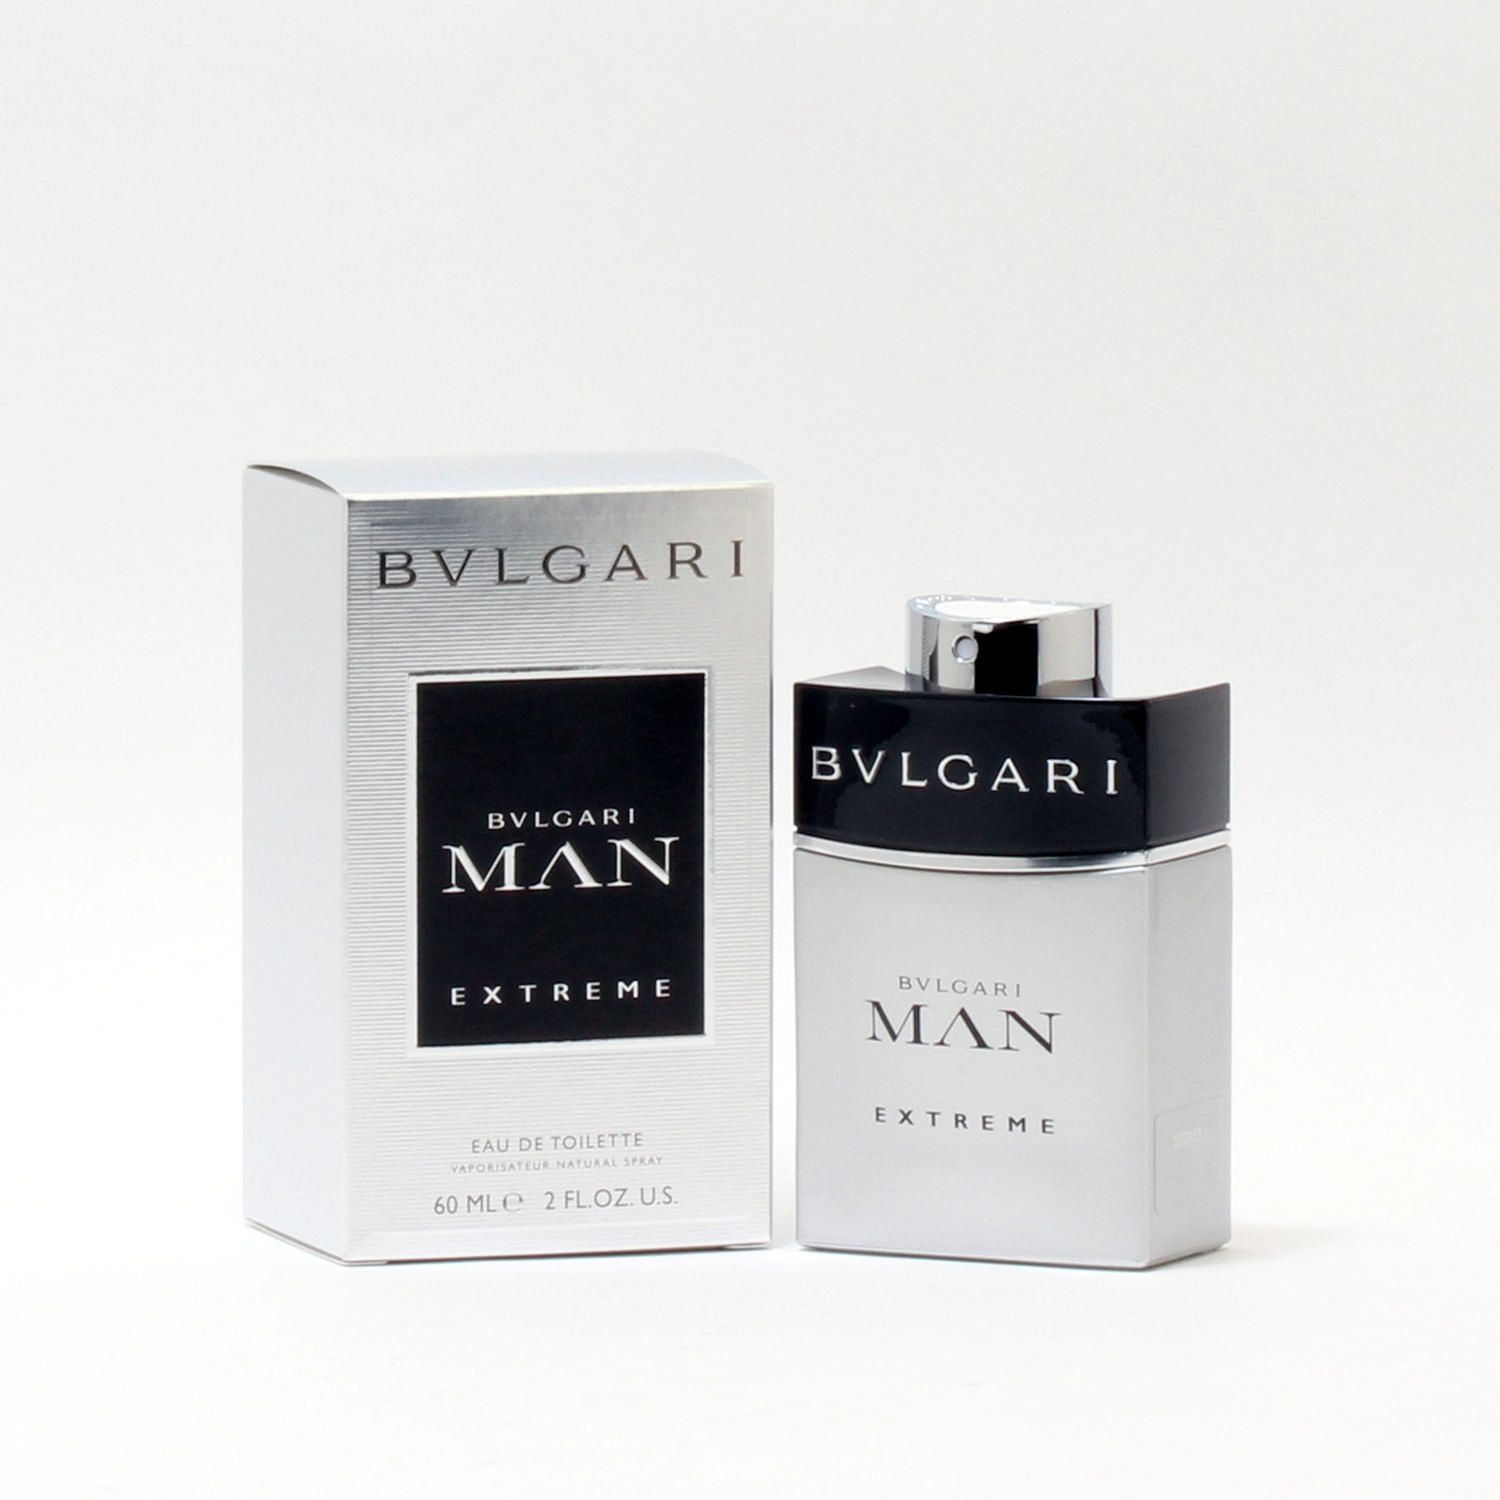 bvlgari intense perfume